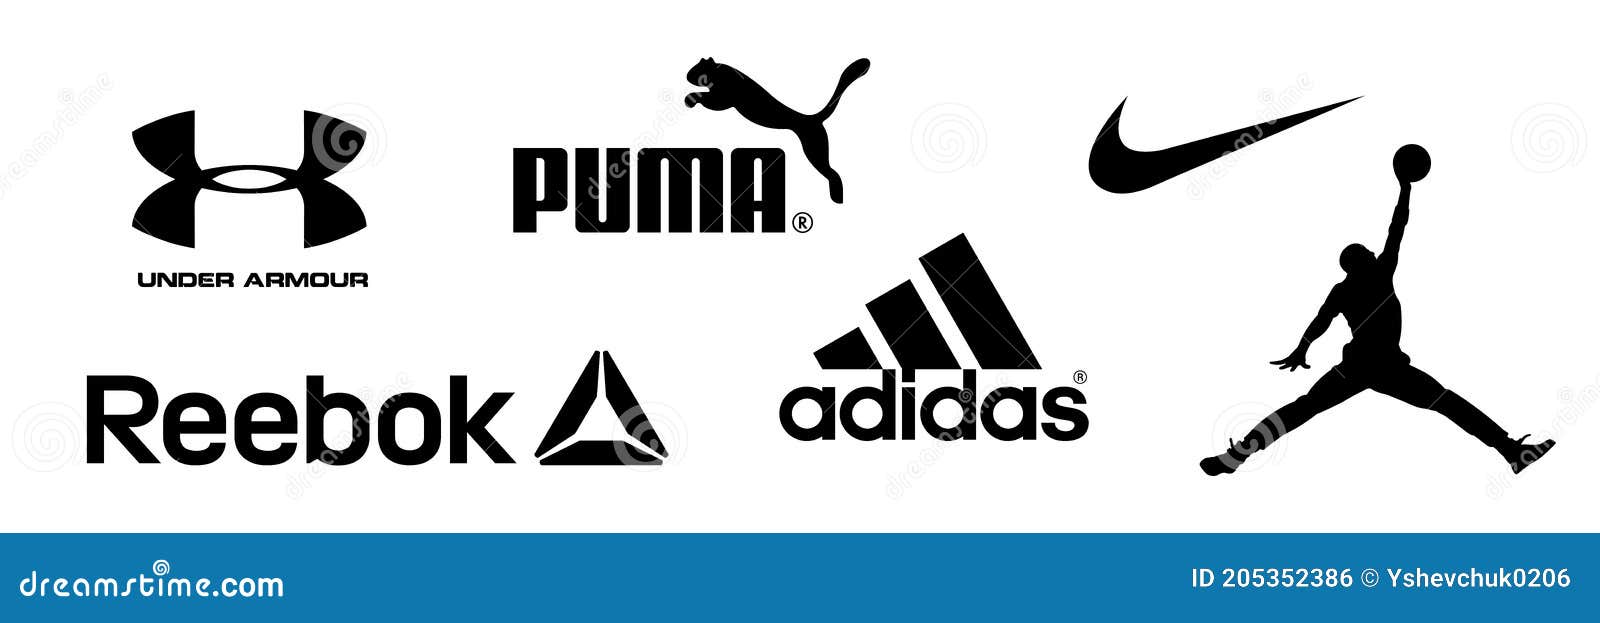 Reebok, Nike, Jordan, Adidas, Puma, Under Armour - Logos of Sports Equipment and Sportswear Company. Kyiv, Ukraine - December 20, Editorial Photo - Illustration jordan, produce: 205352386